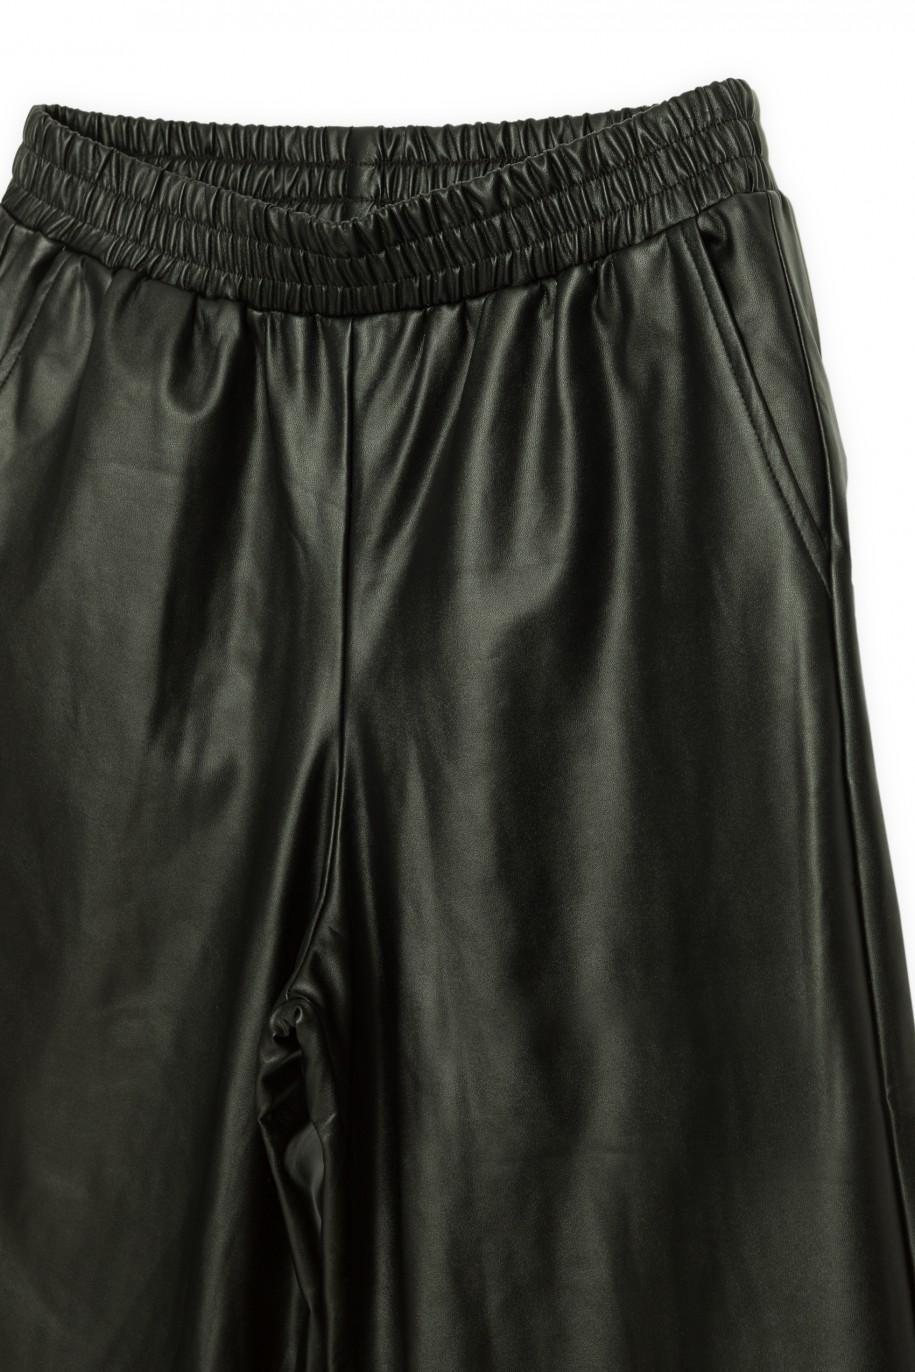 Czarne spodnie typu culotty ze sztucznej skóry - 36143